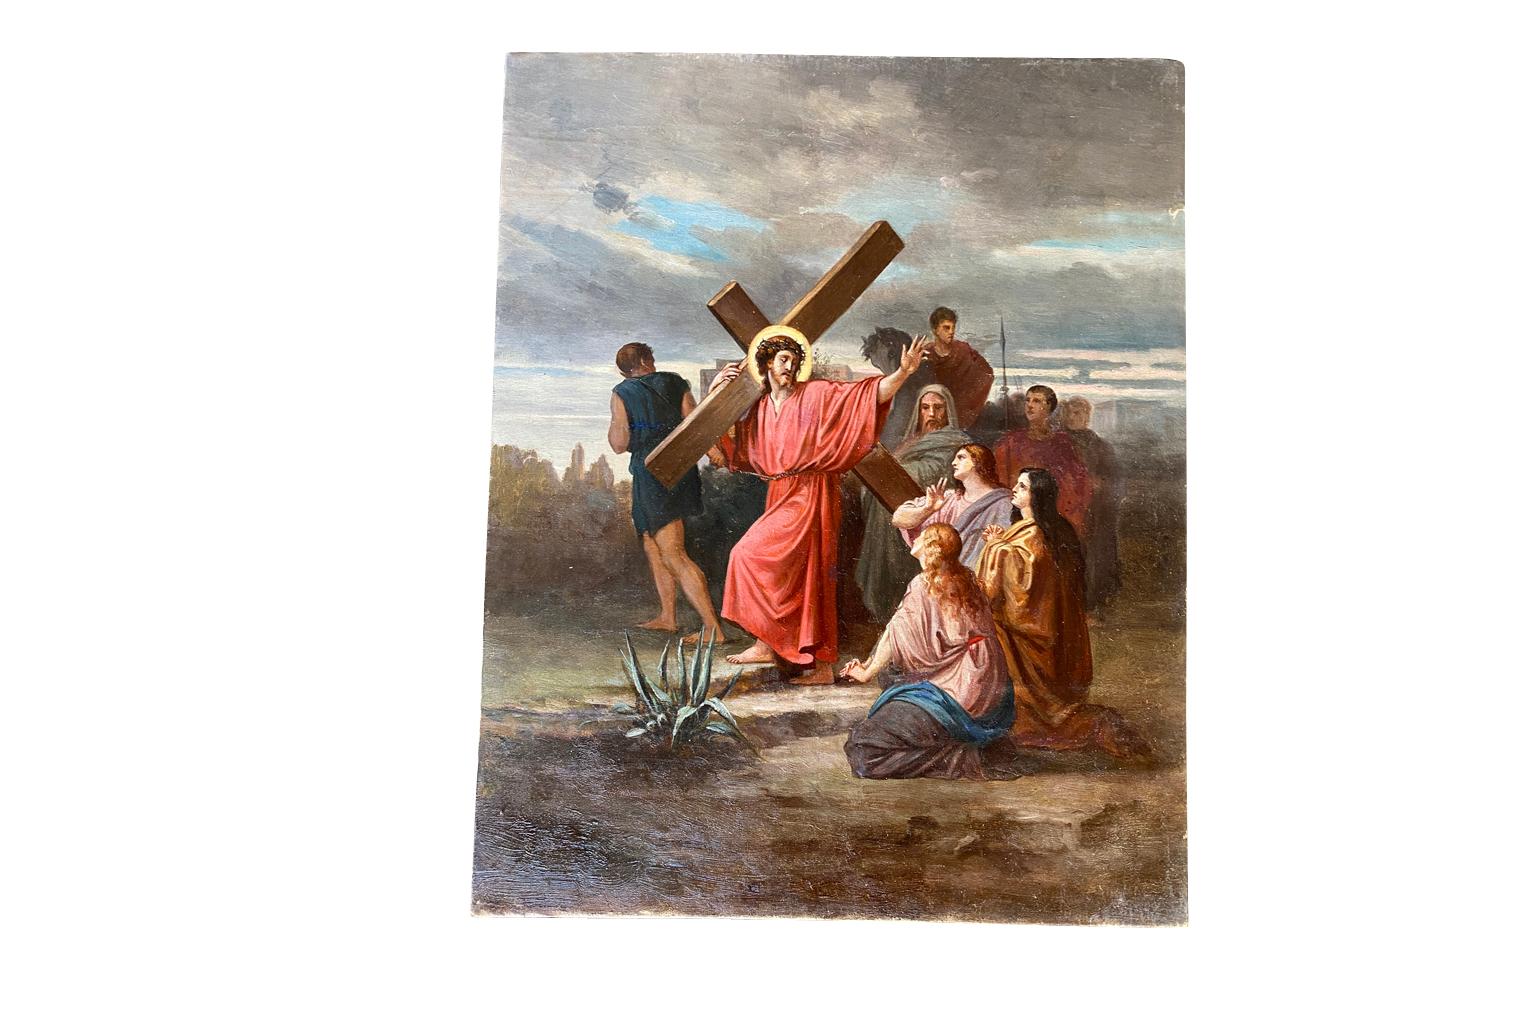 Ölgemälde auf Leinwand, Staions Of The Cross, spätes 19. Jahrhundert 1